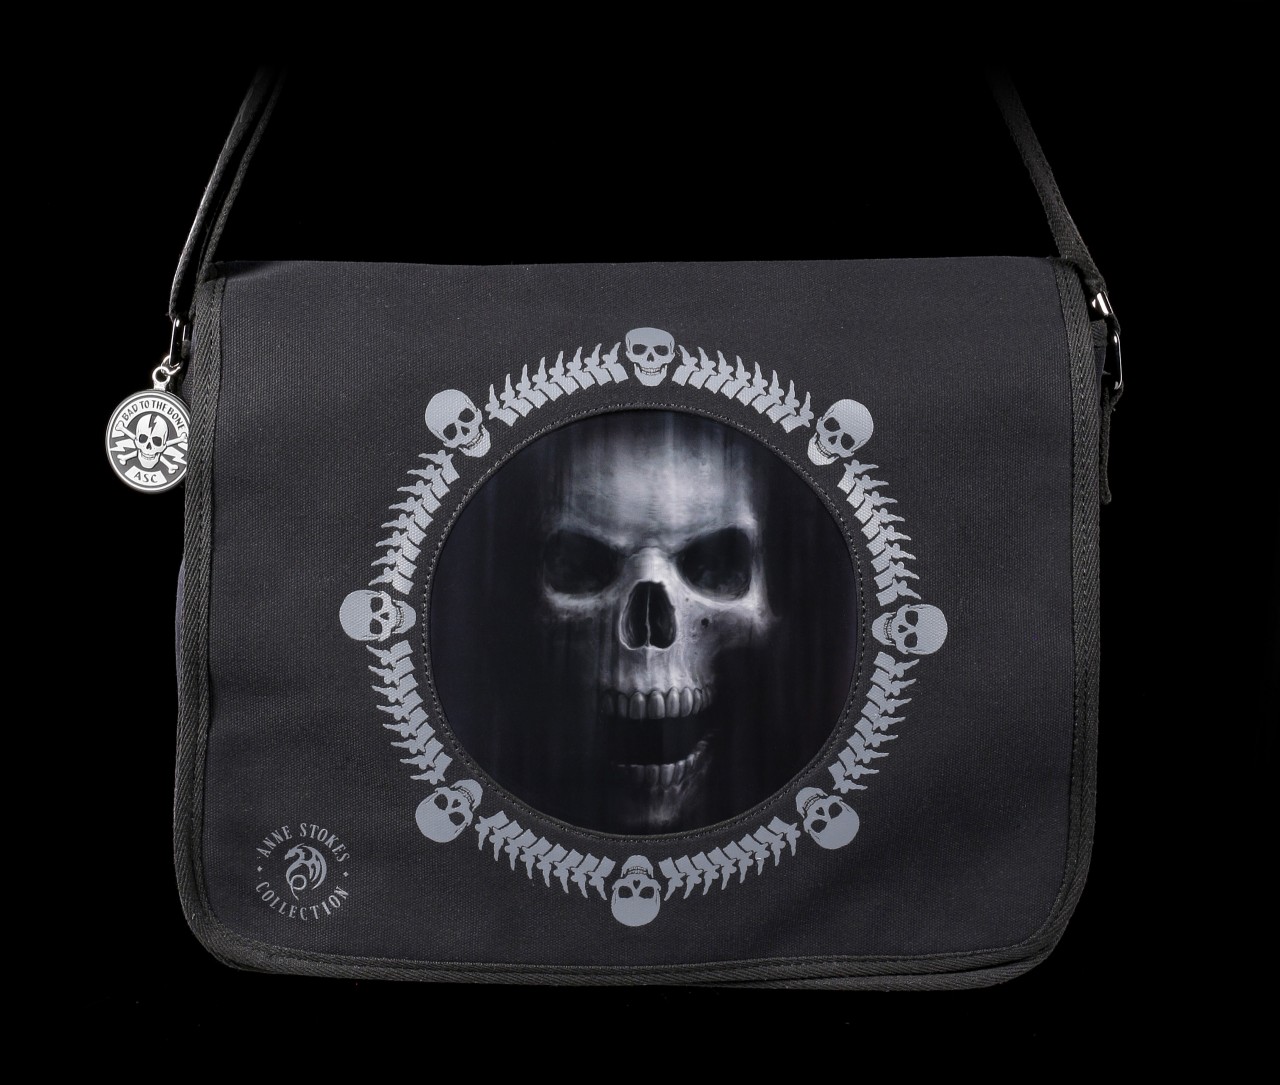 3D Messenger Bag with Skull - The Watcher